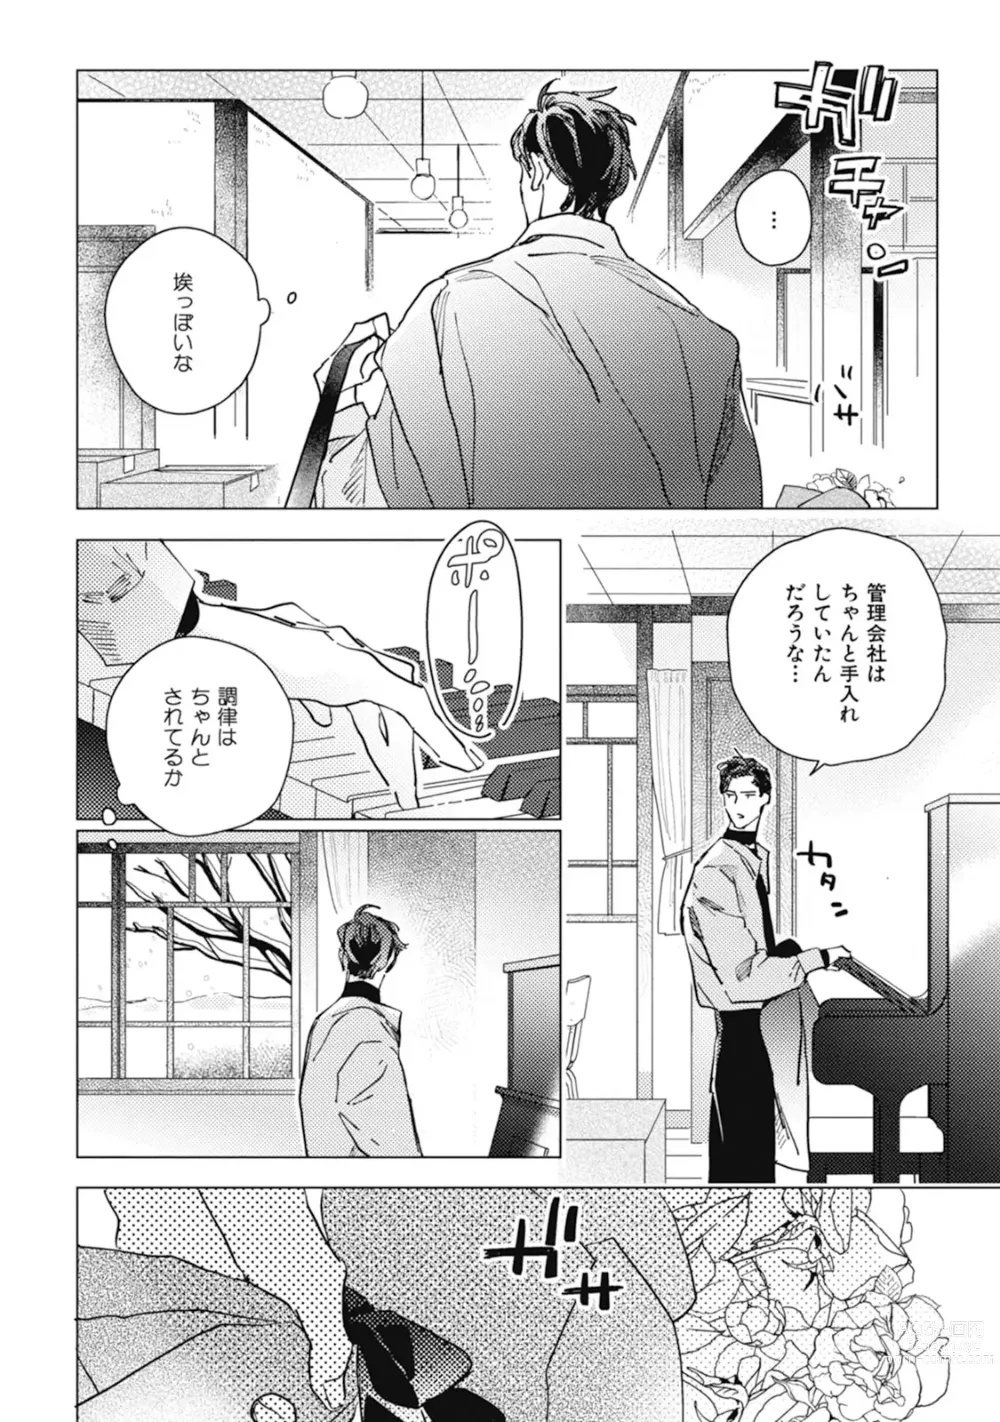 Page 18 of manga Kurikaeshi Ai no Oto